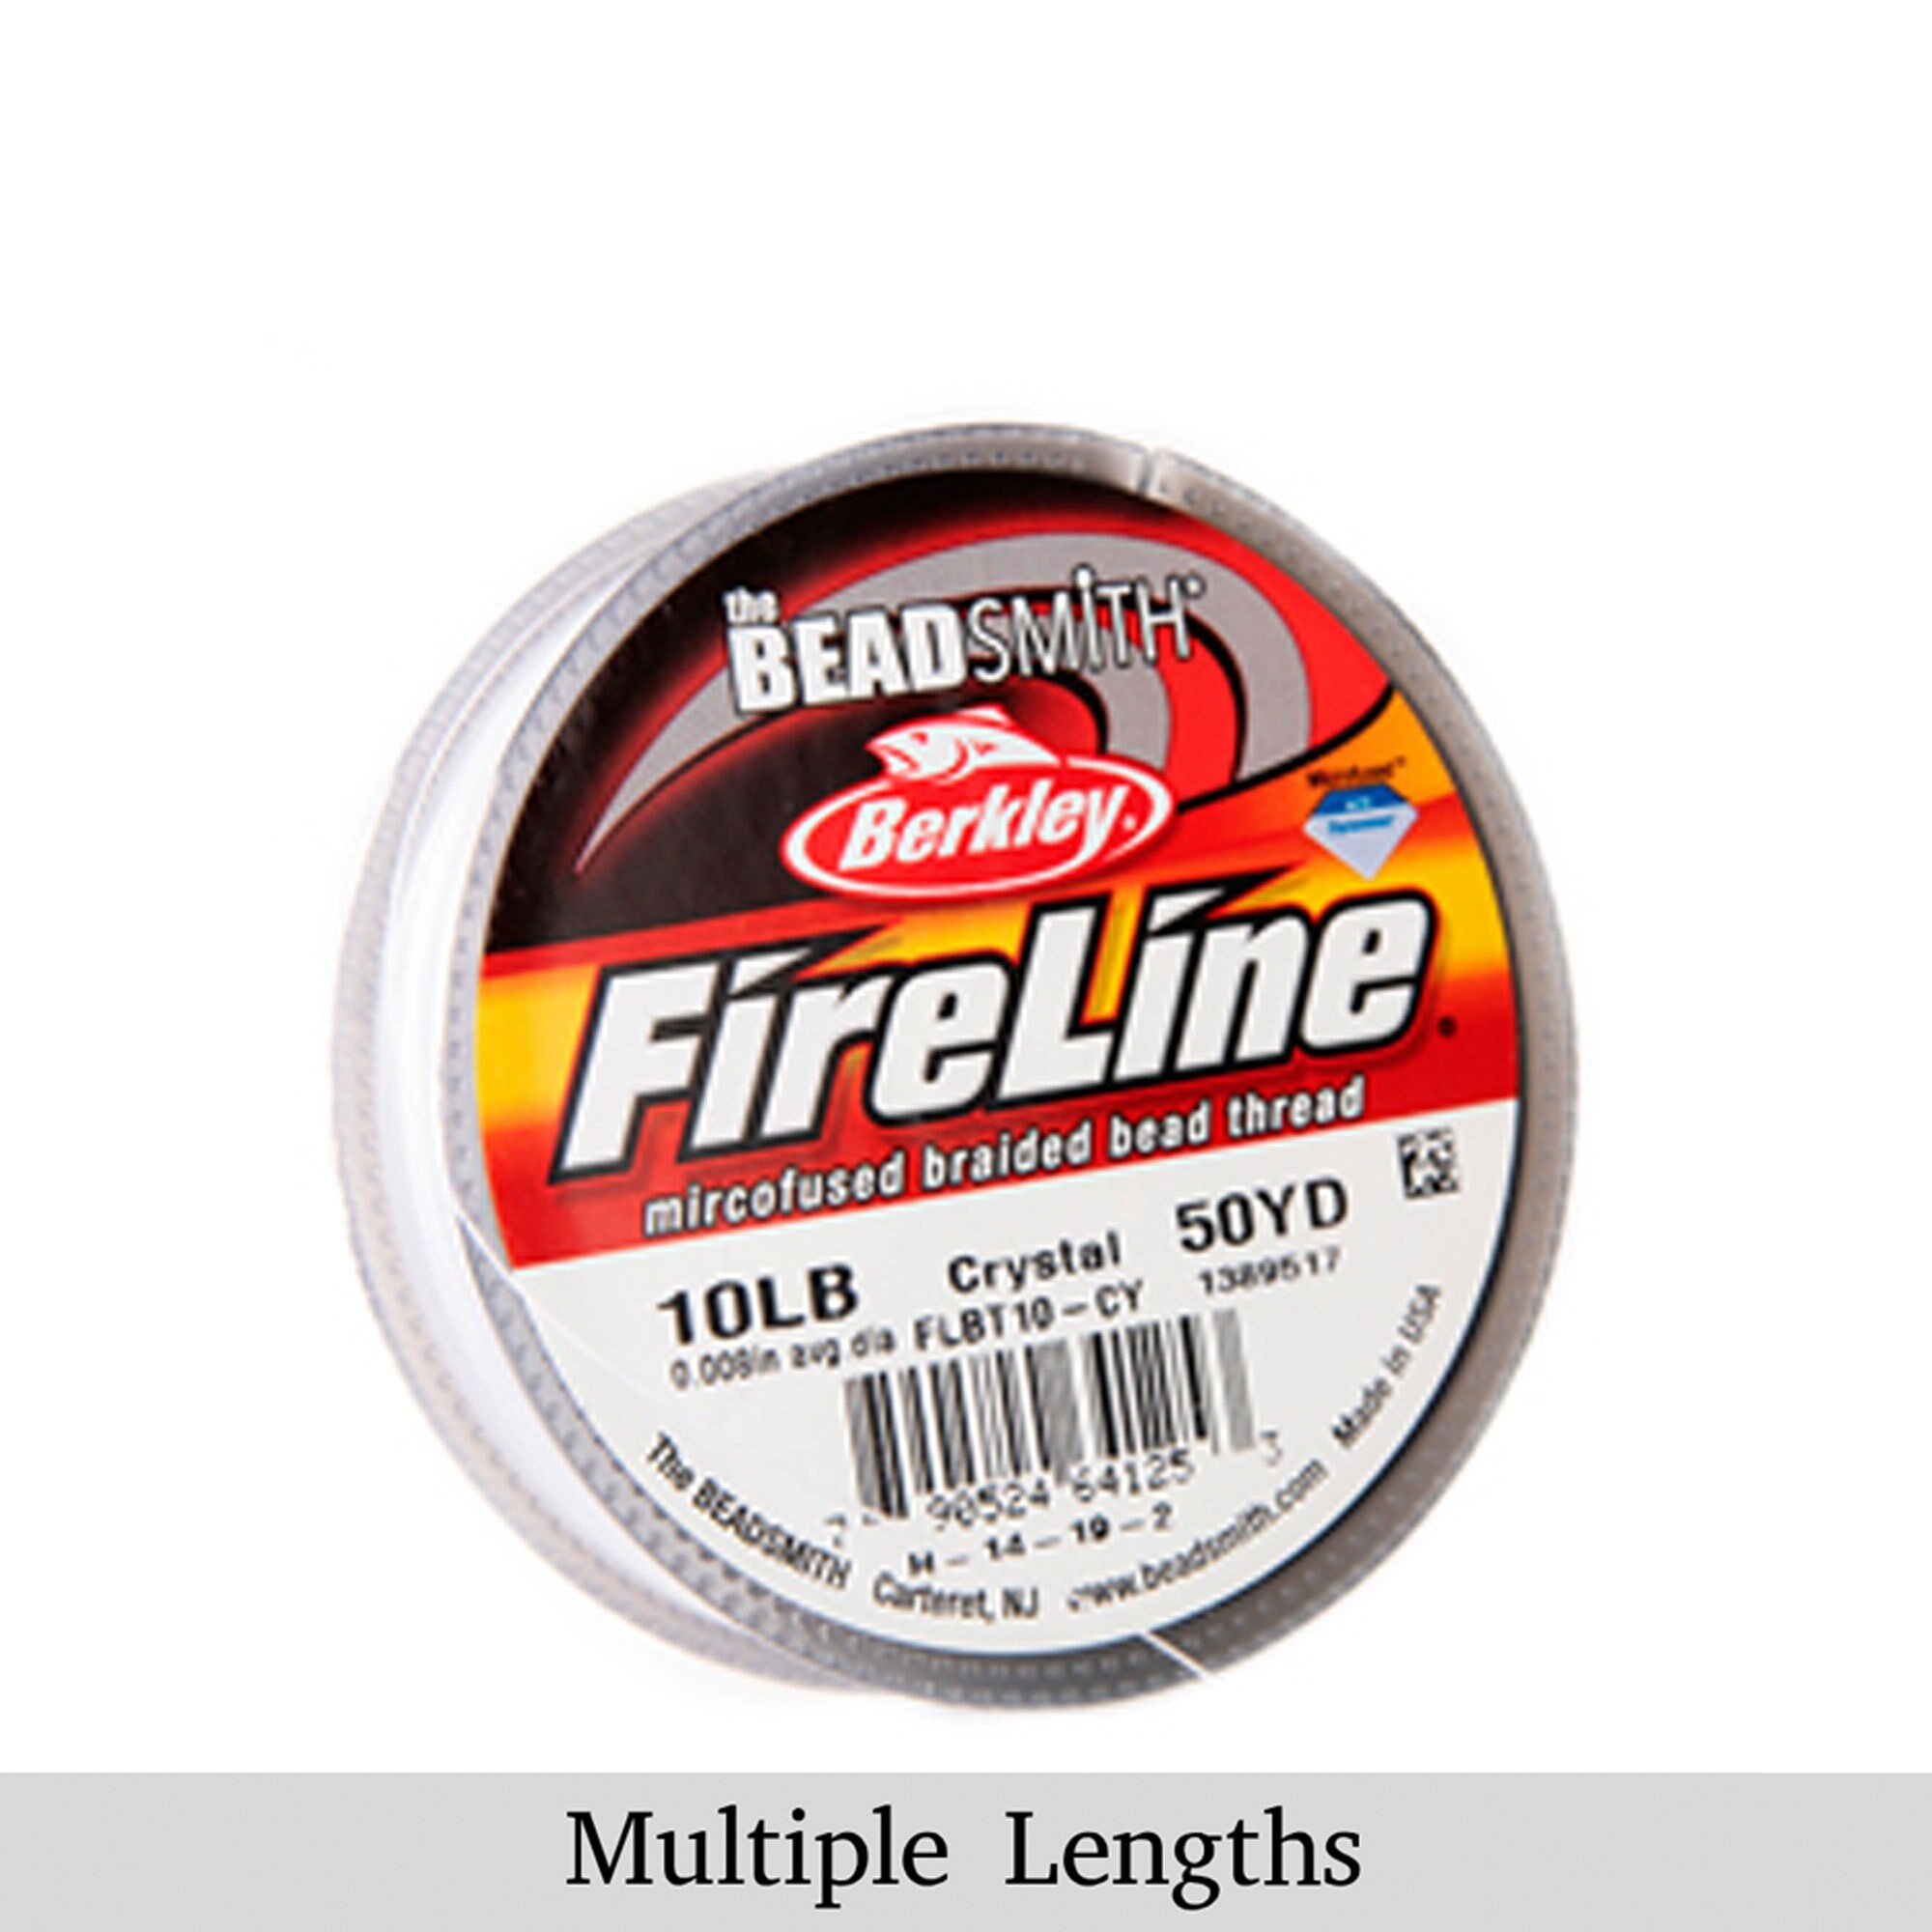 Beadalon WildFire Beading Thread - Green, 0.008, 300 yds